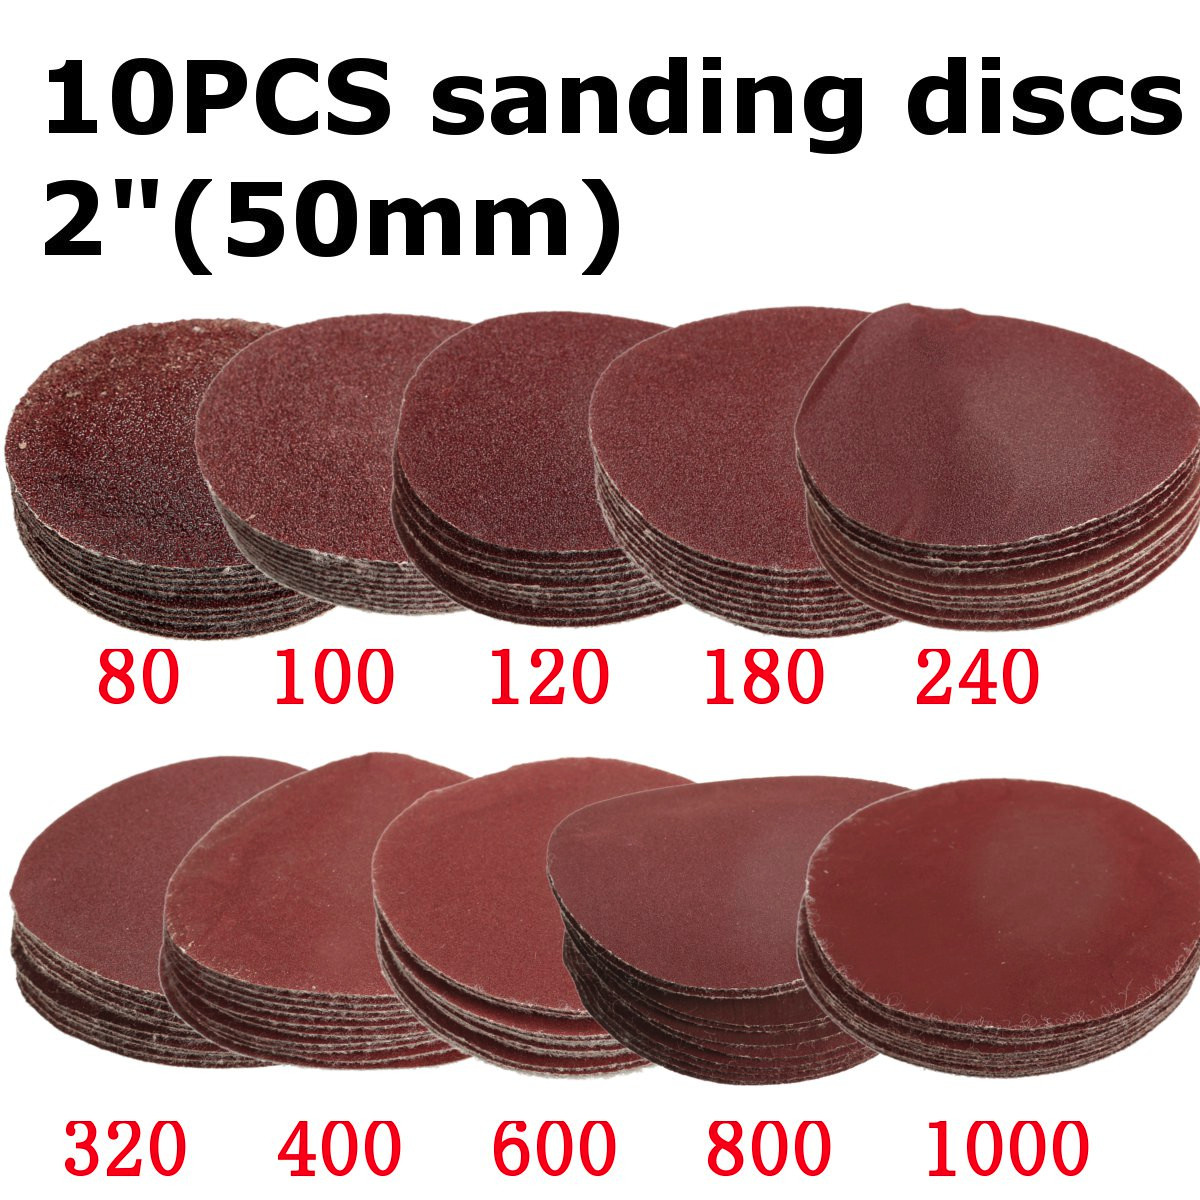 10pcs-2-Inch-Sanding-Discs-80-1000-Grit-Sander-Discs-Set-50mm-Sanding-Polishing-Pads-1091200-10